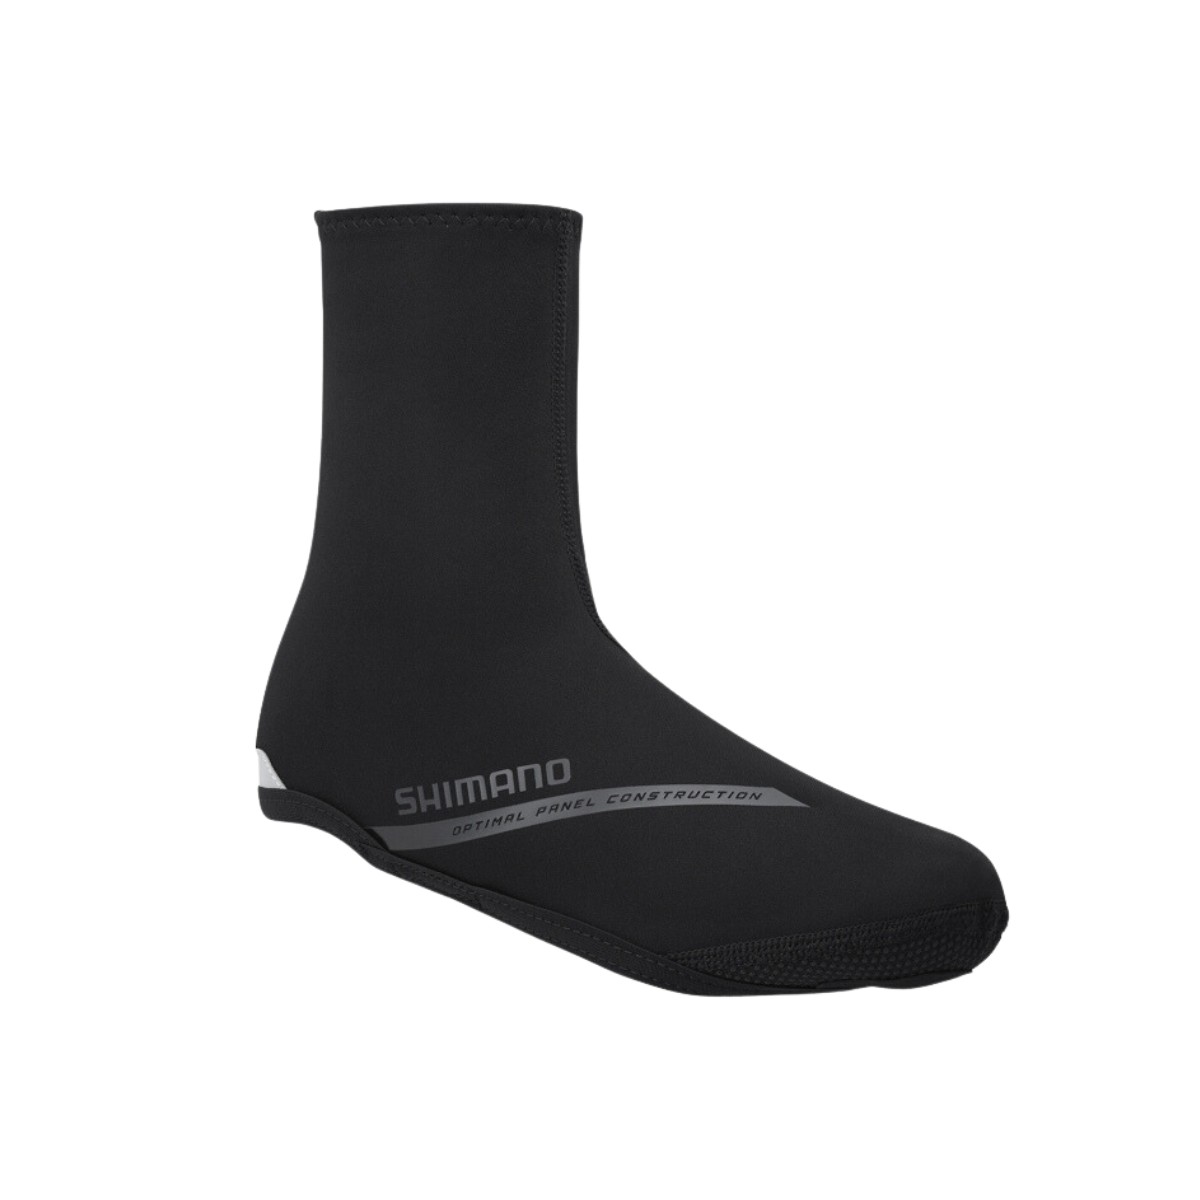 Capa para sapato Shimano Dual Softshell Preto, Tamanho XL ( talla : 44-46) product